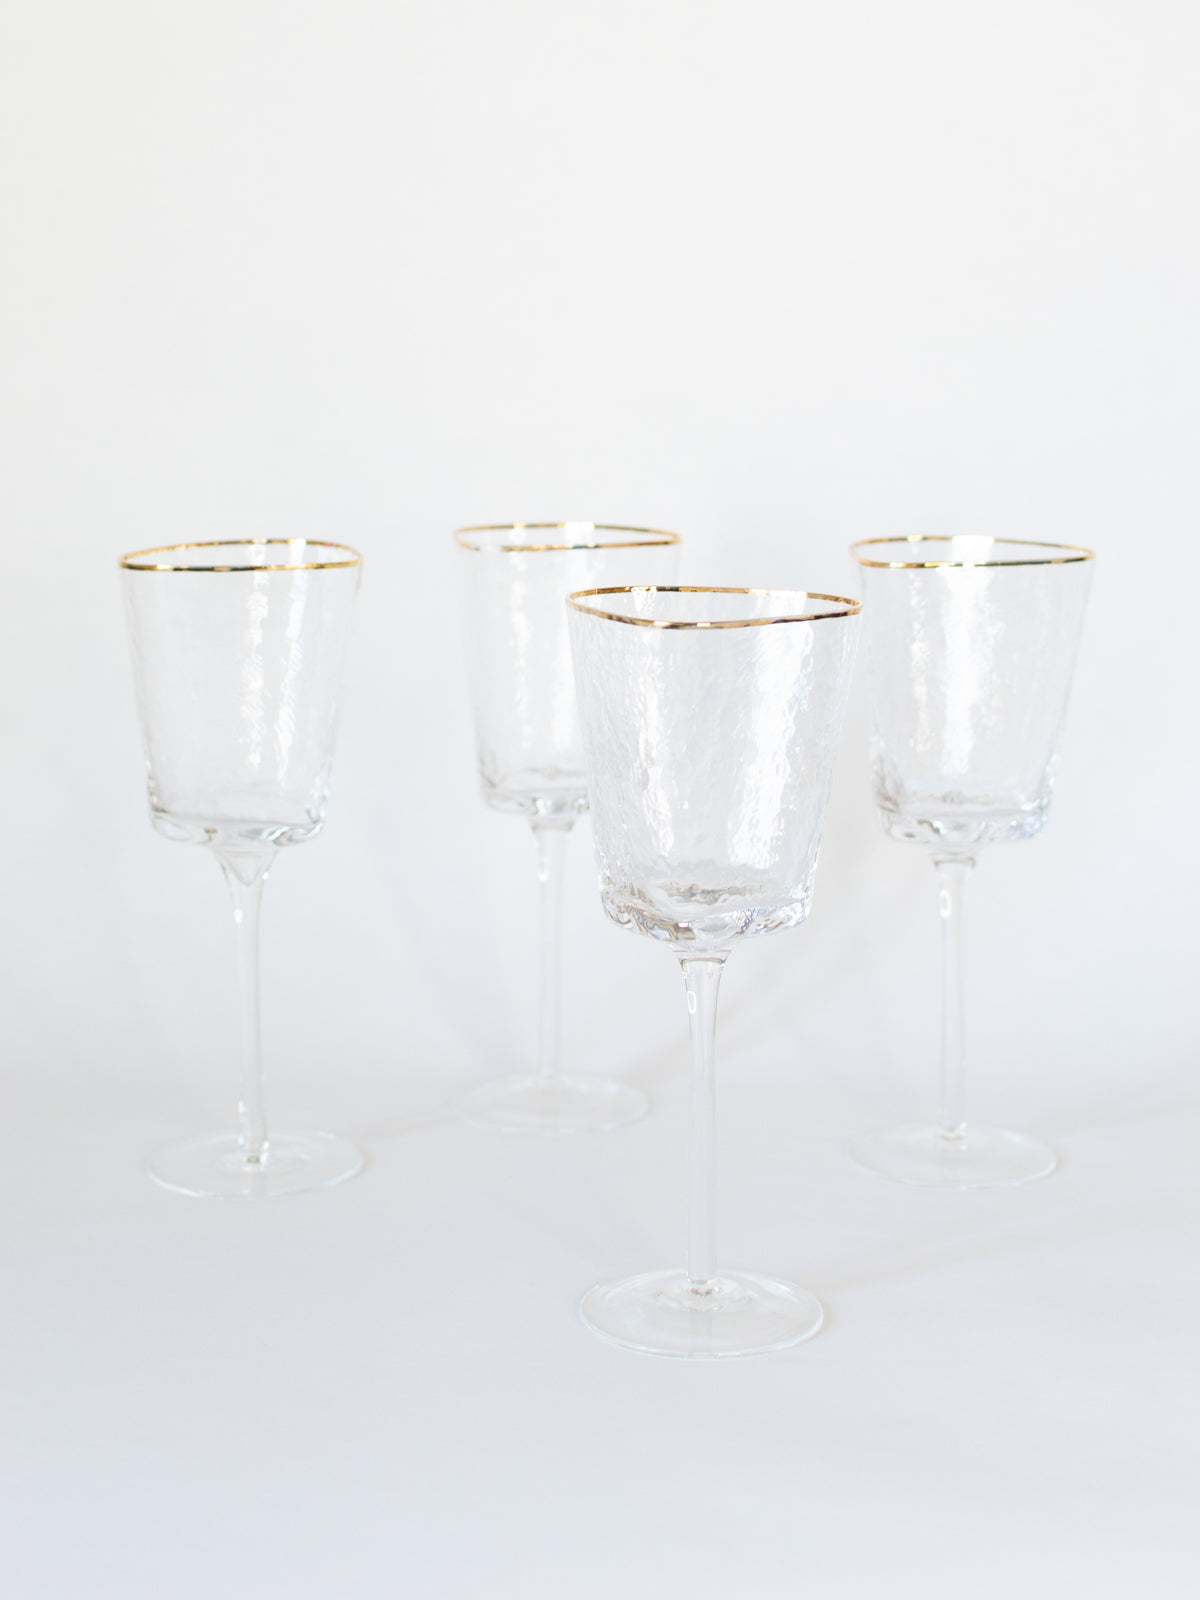 Triangular Gold Edge Wine Glasses- Set of 4